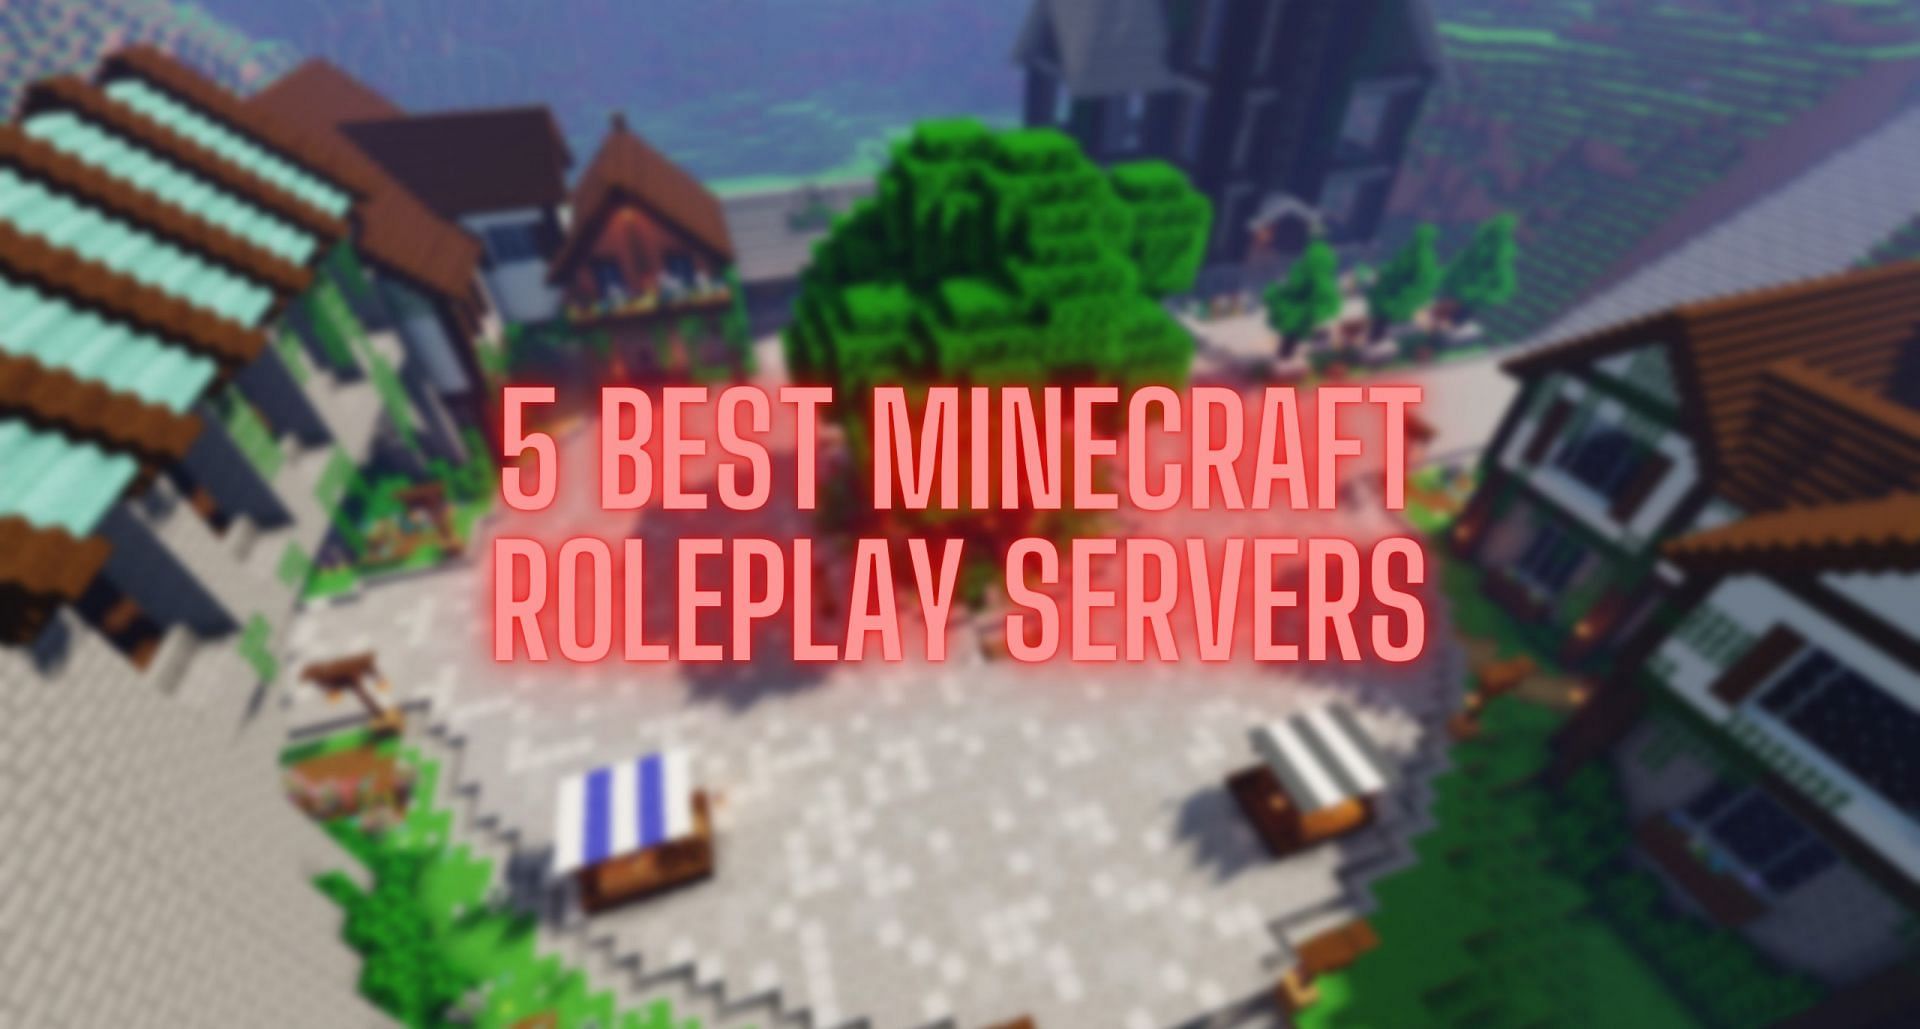 Minecraft roleplay servers allow players to explore their imagination (Image via u/panicas/Reddit)